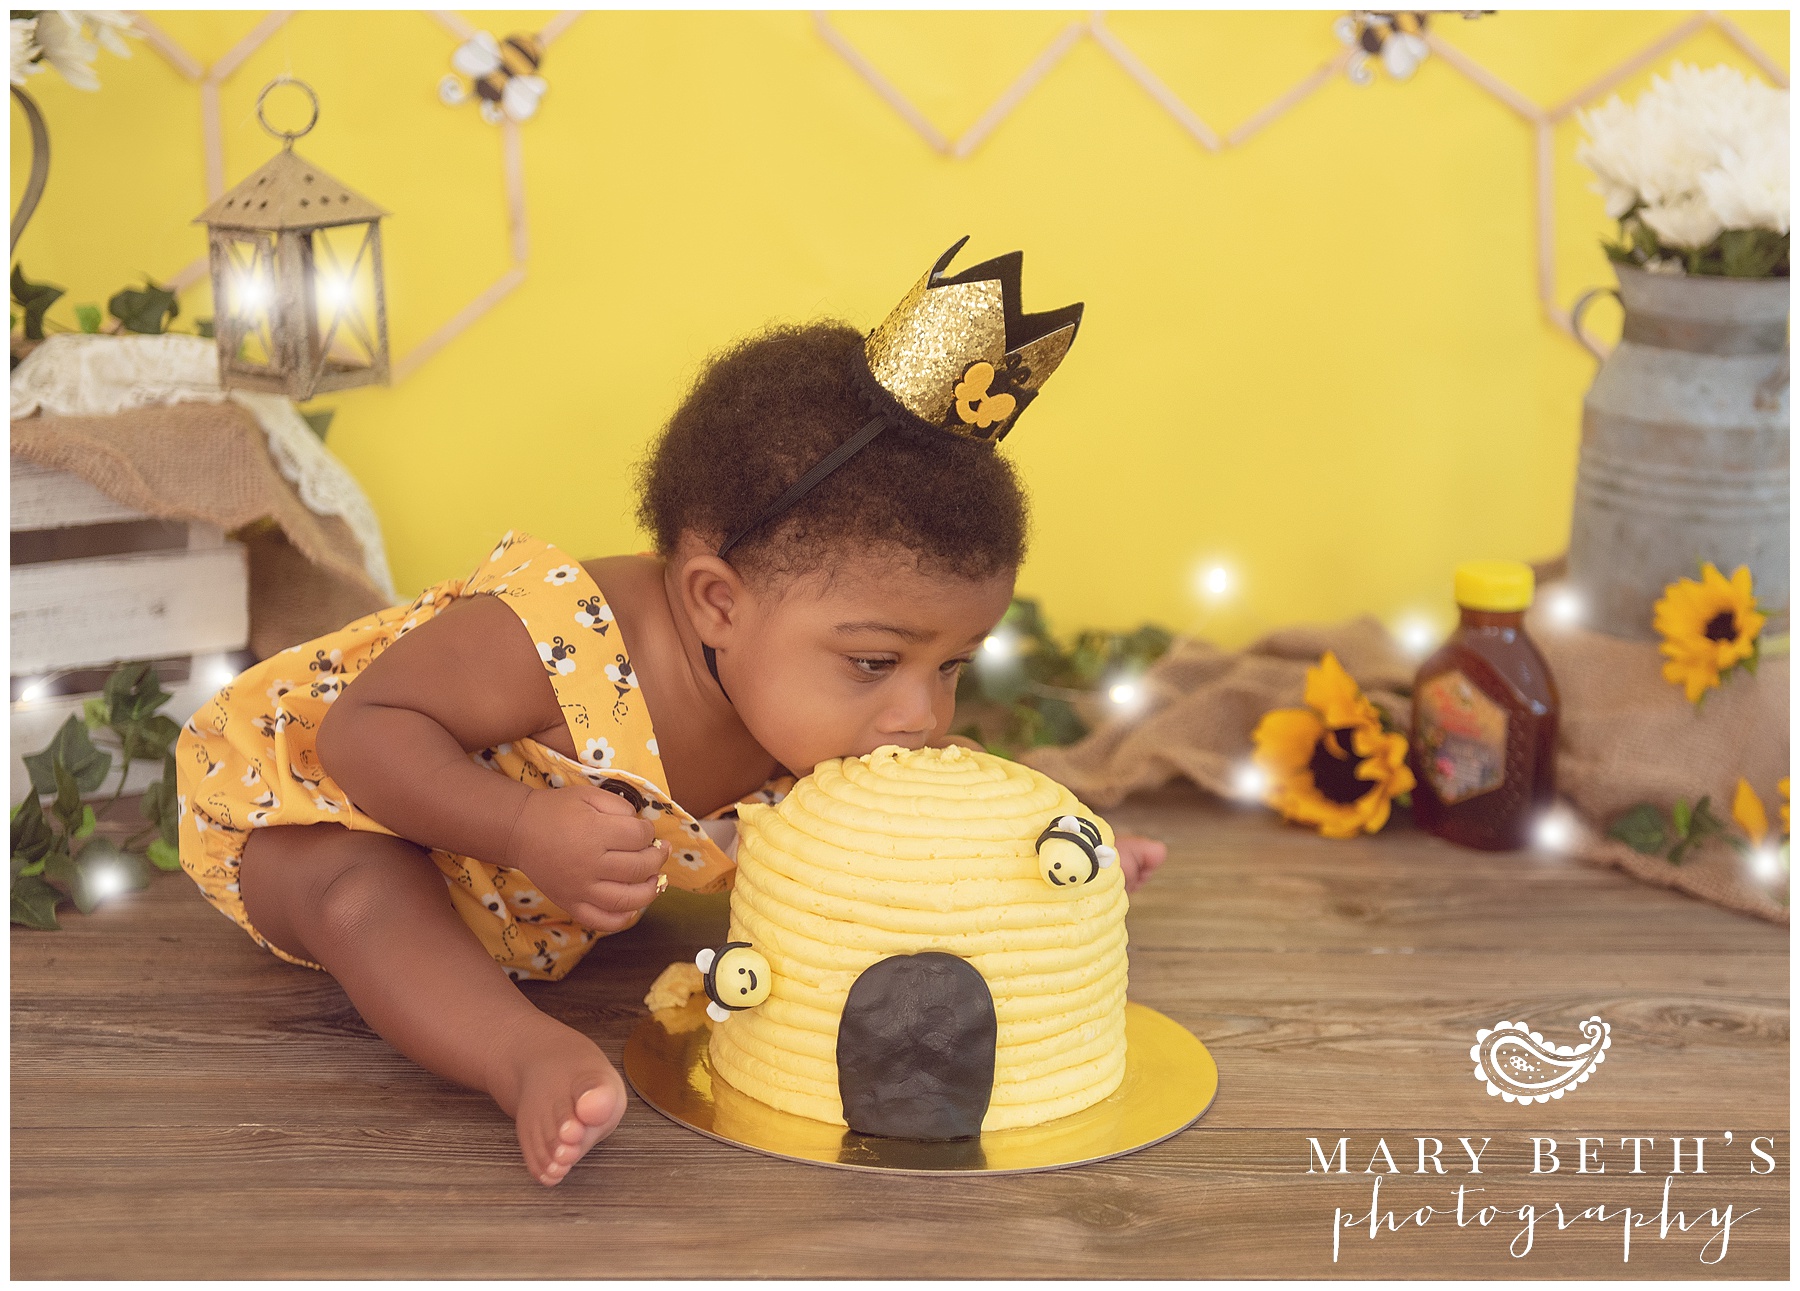 MaryBeths Photography - Augusta, GA Newborn Photographer II MaryBeths Photography II Cake Smash 1st Birthday Session_0032.jpg